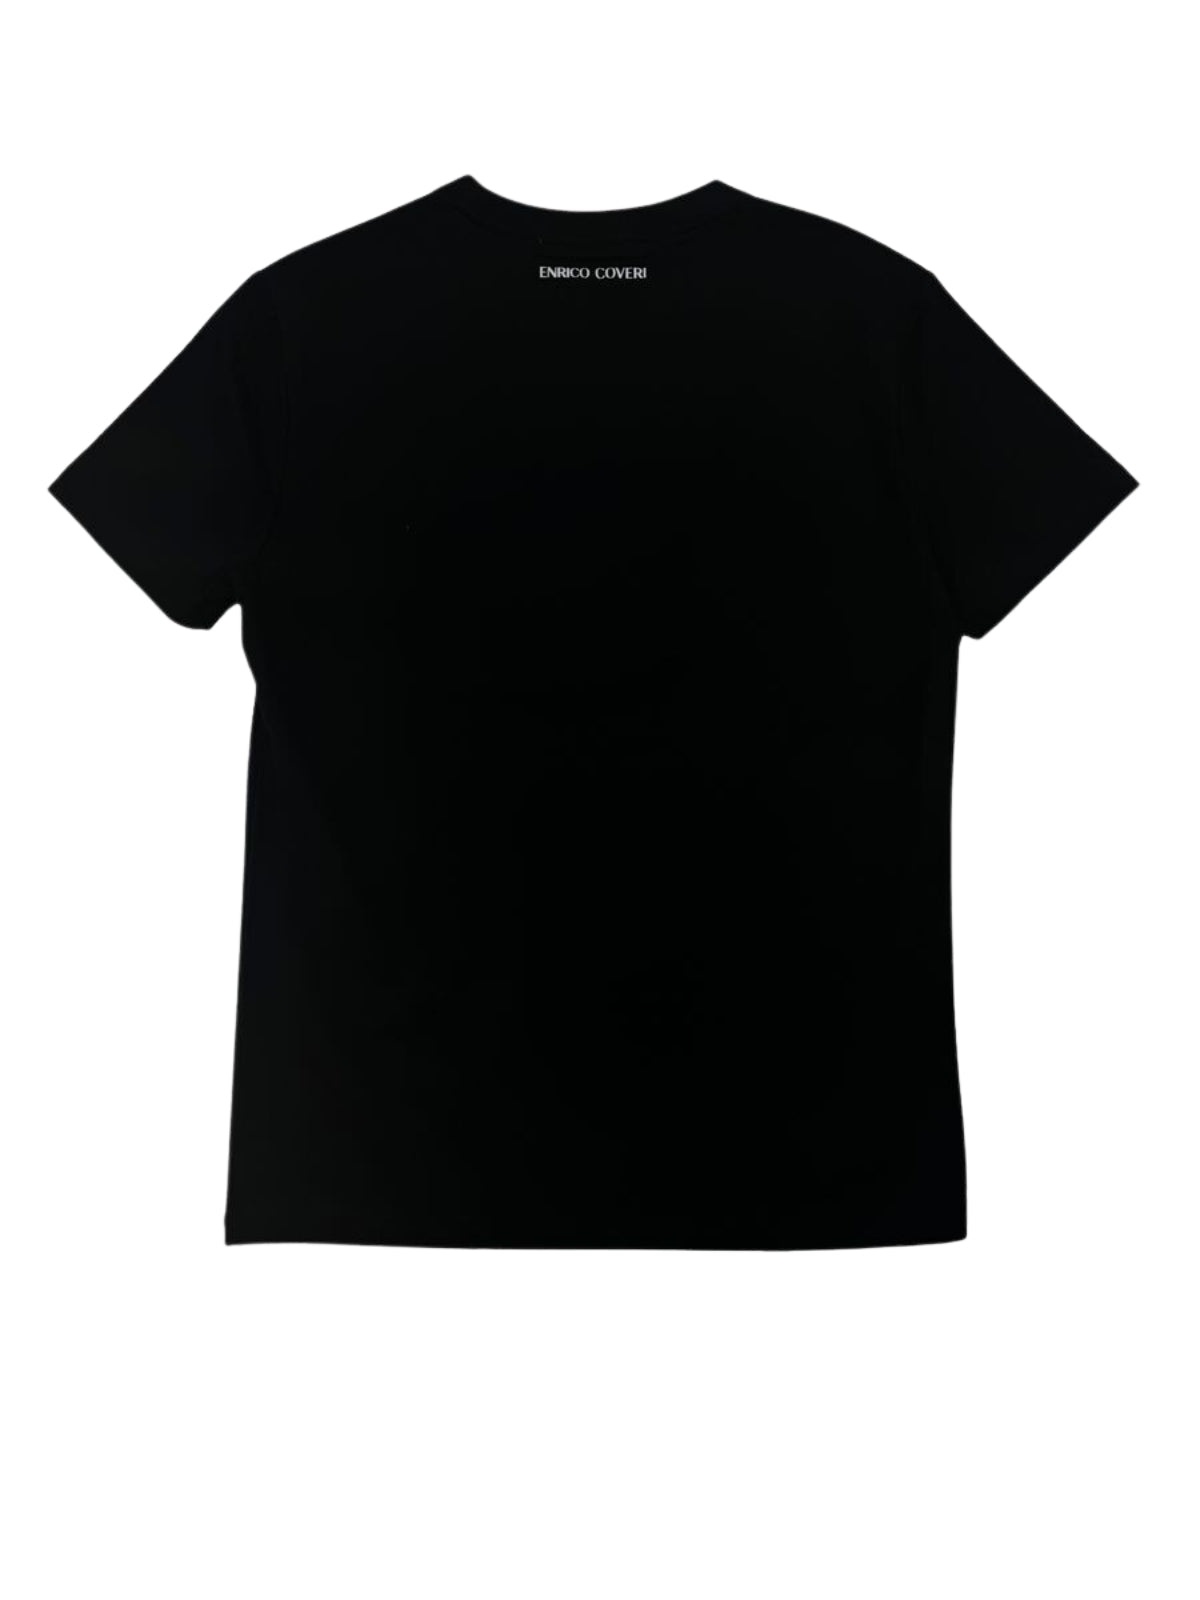 Enrico T-Shirt Center Logo Black